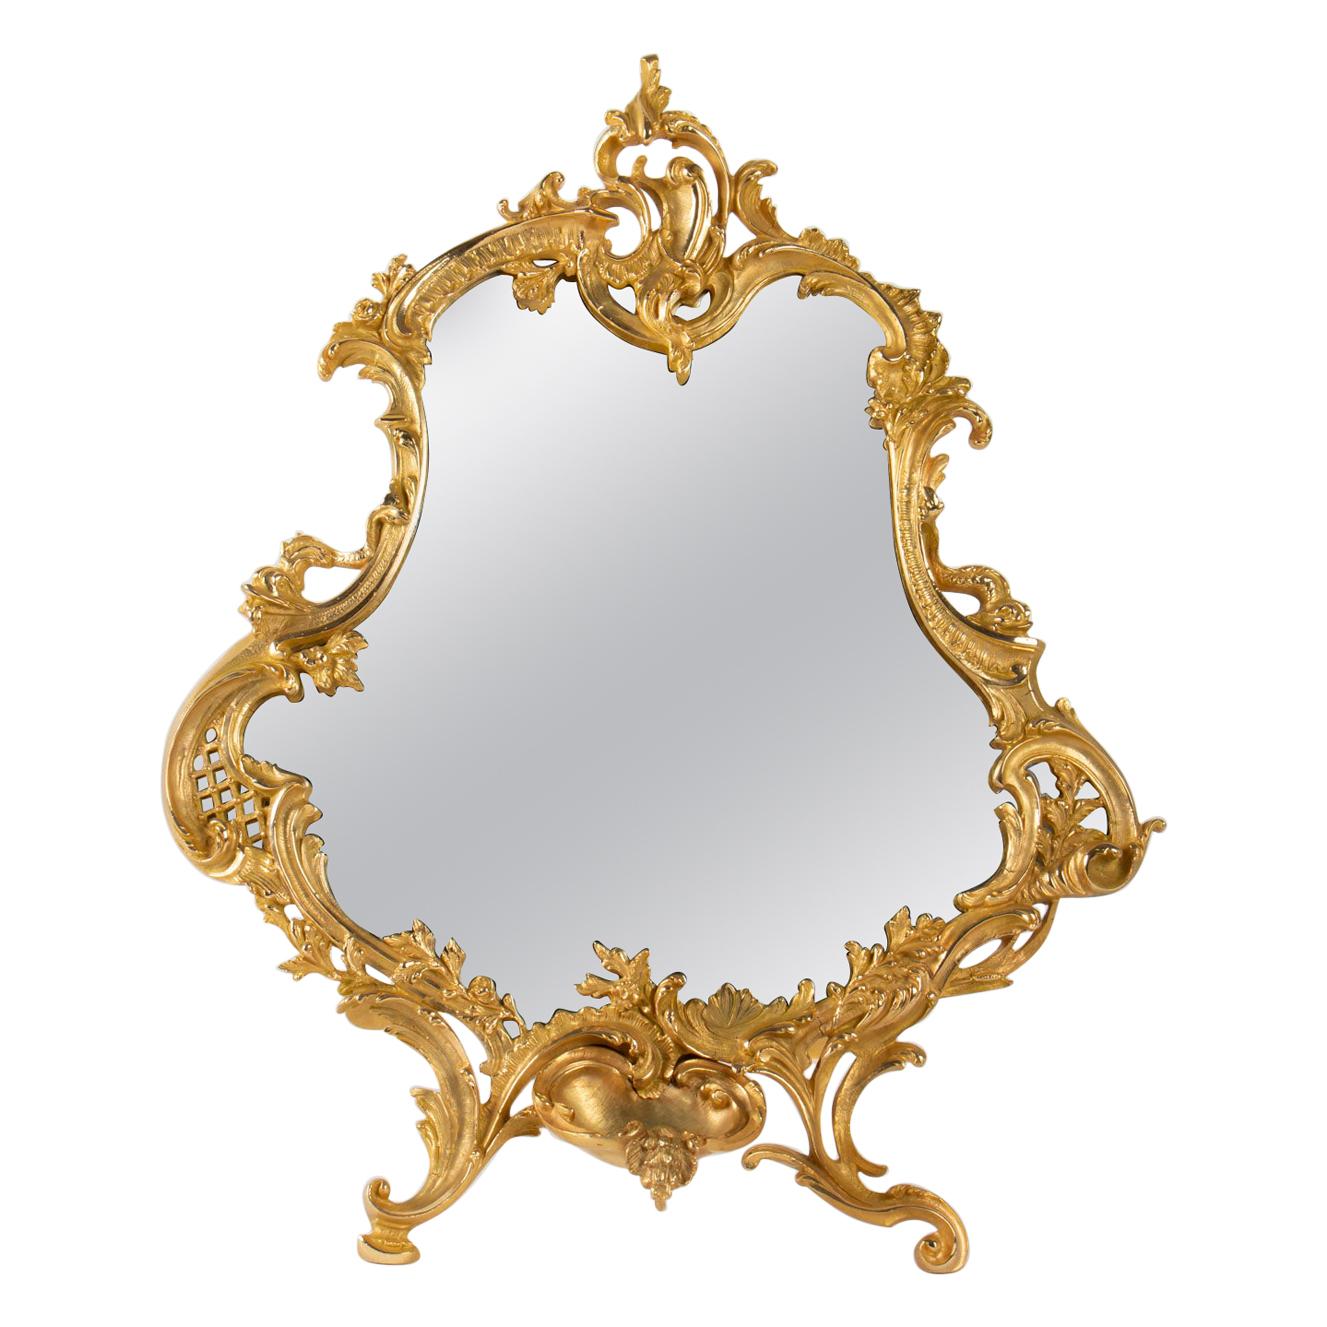 Important Gilt Bronze Table Mirror, Napoleon III Period, 1870-1880